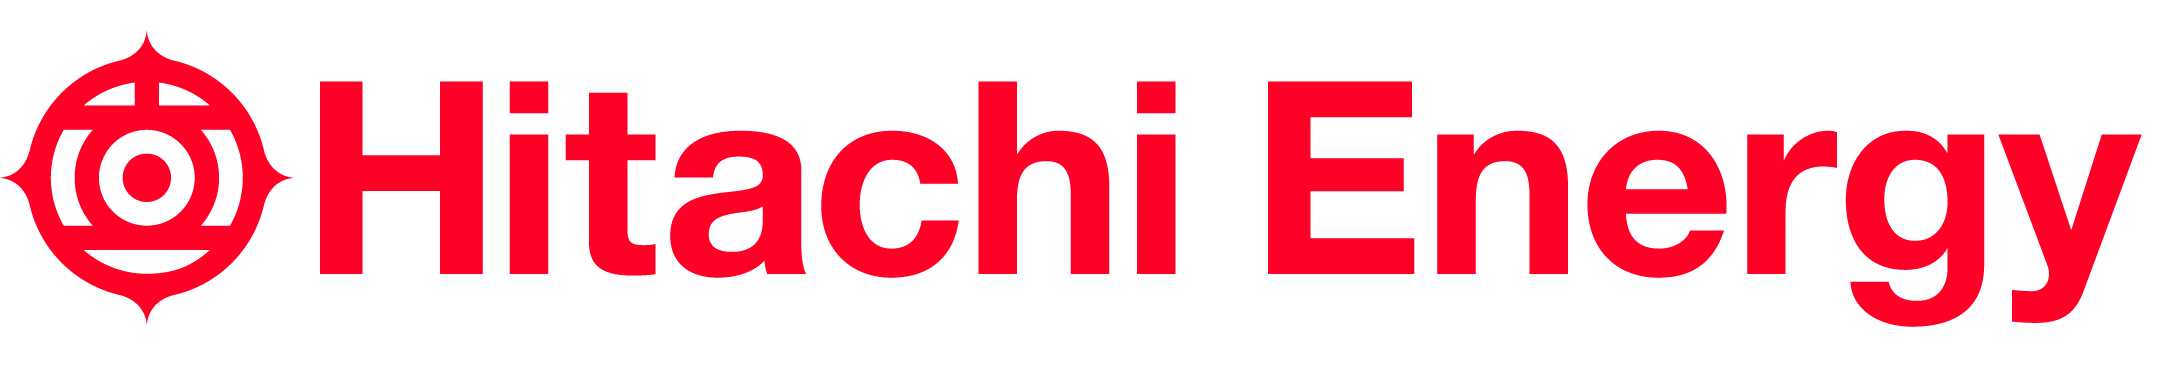 Hitachi Energy logo.